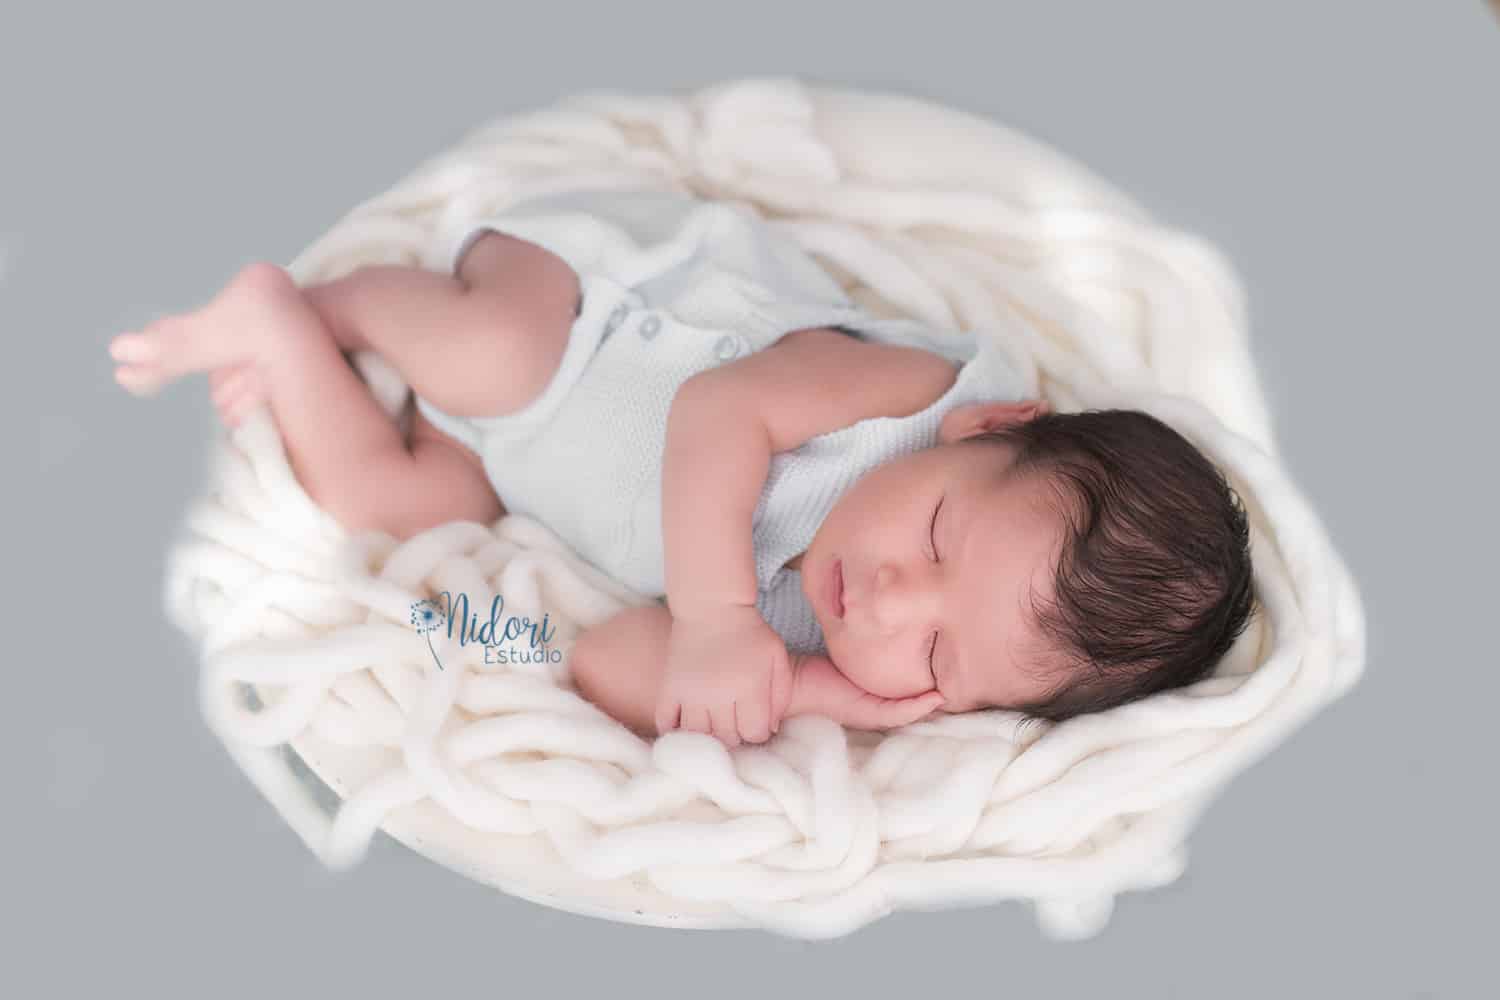 fotosbebe-fotografia-recien-nacido-newborn-bebes-nidoriestudio-fotos-valencia-almazora-castellon-españa-spain-19